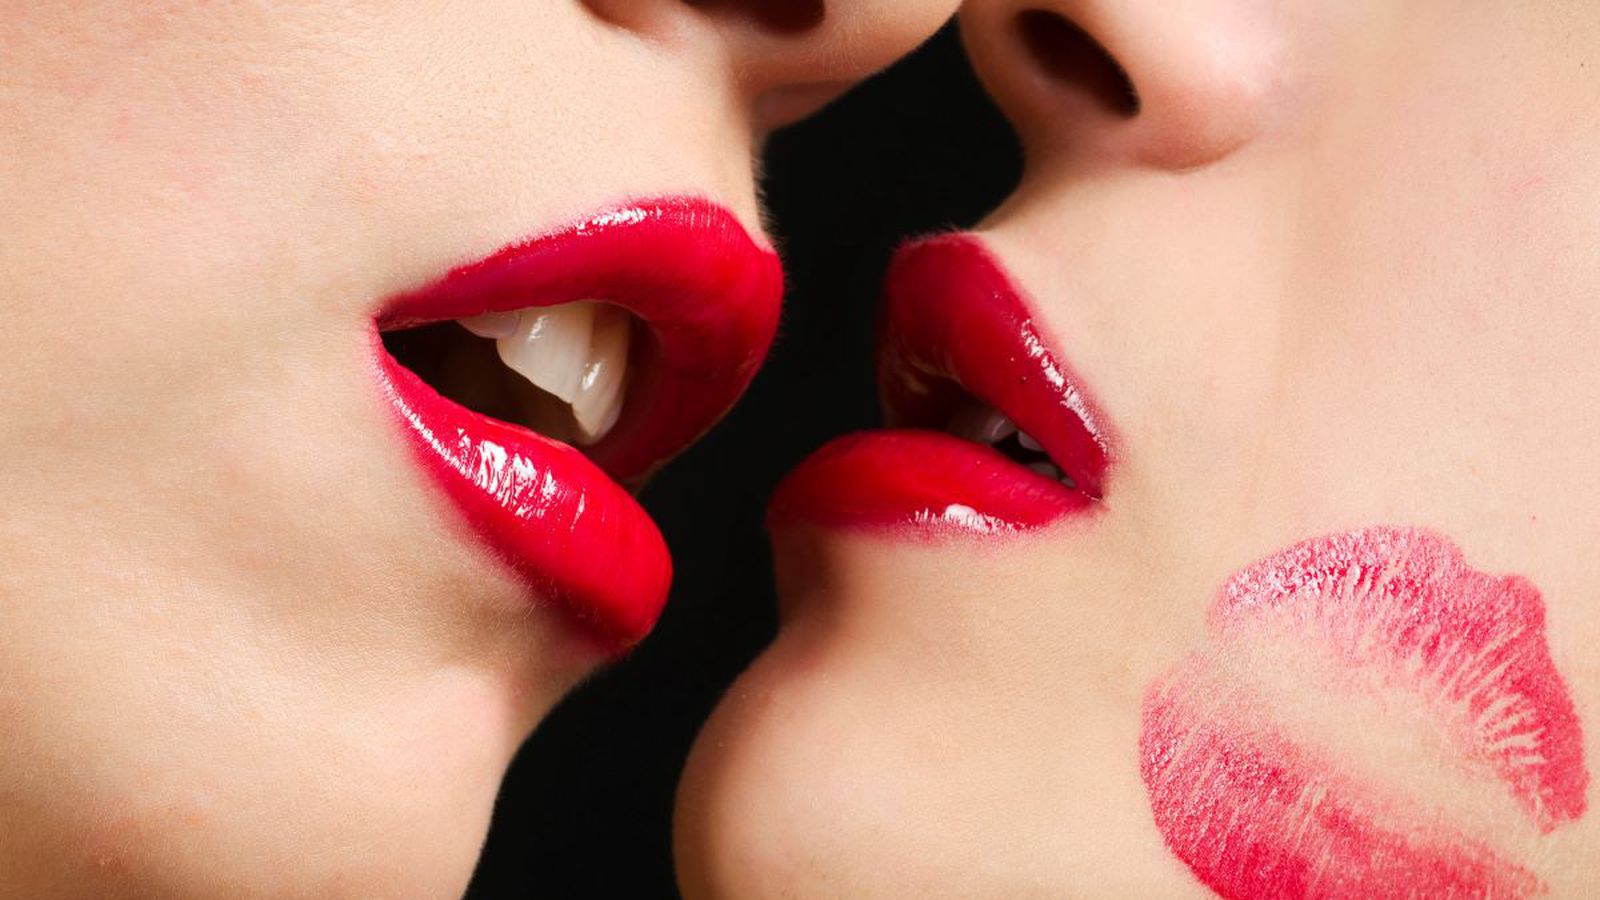 Lipstick lesbians kissing